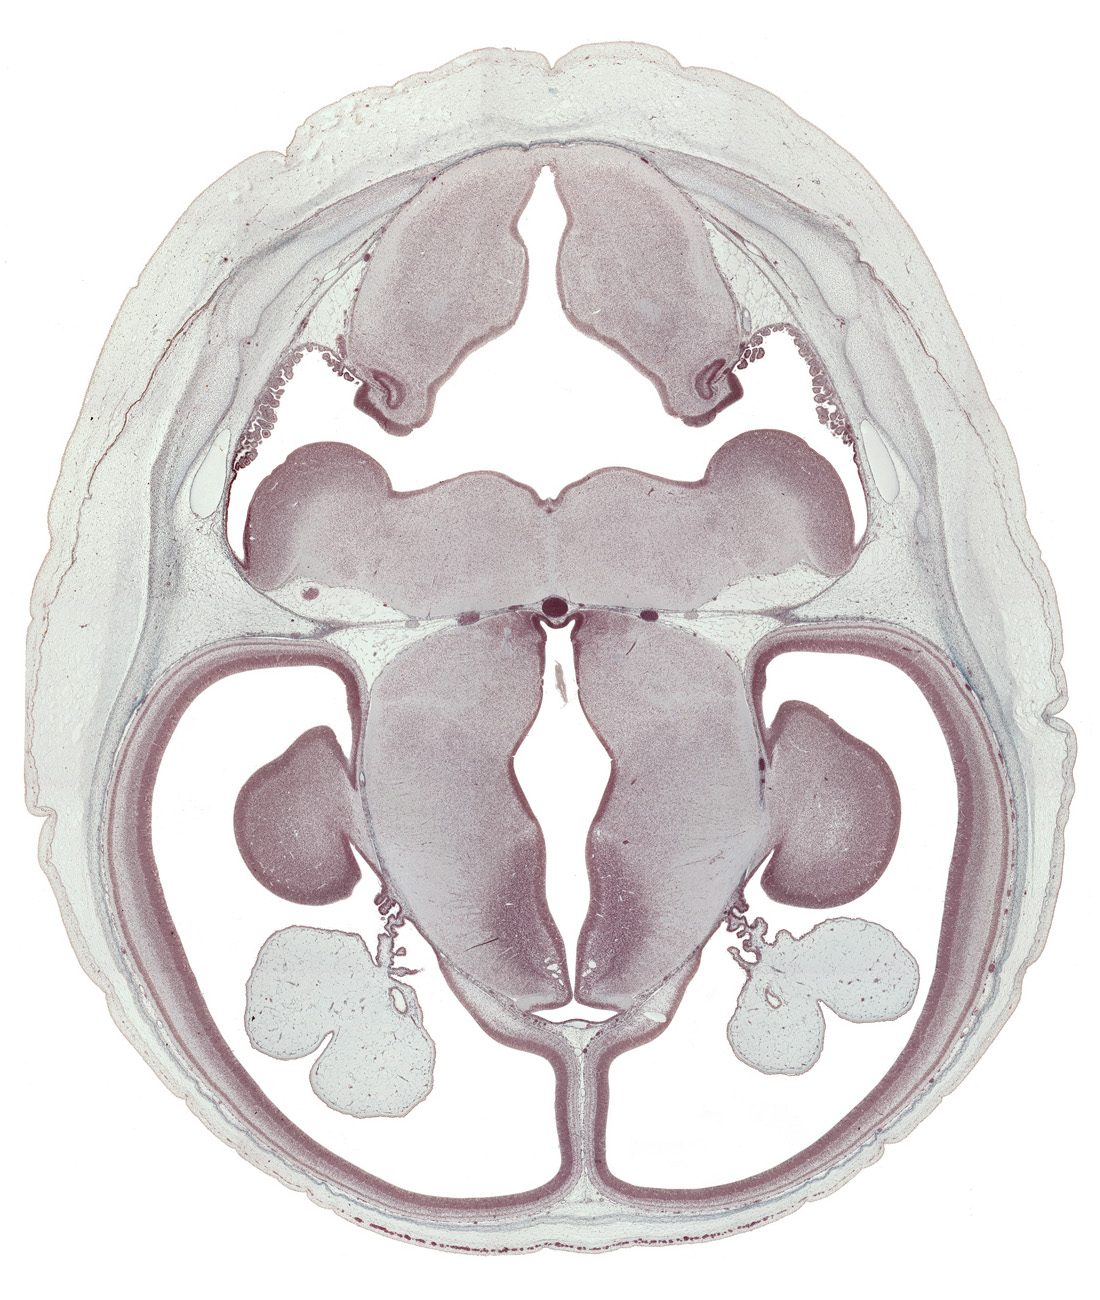 alar plate(s), basal plate, basis pedunculi of pons region (metencephalon), external cerebellum, falx cerebri region, fusion region with anterior choroidal artery, hypothalamic sulcus, hypothalamus, inferior sagittal sinus, internal capsule, internal cerebellum, median sulcus, medulla oblongata, parietal lobe region of cerebral hemisphere, roof of rhombencoel (fourth ventricle), roof plate, subthalamus, sulcus limitans, sulcus medius, superior sagittal sinus, tegmentum of pons, temporal lobe region of cerebral hemisphere, third ventricle